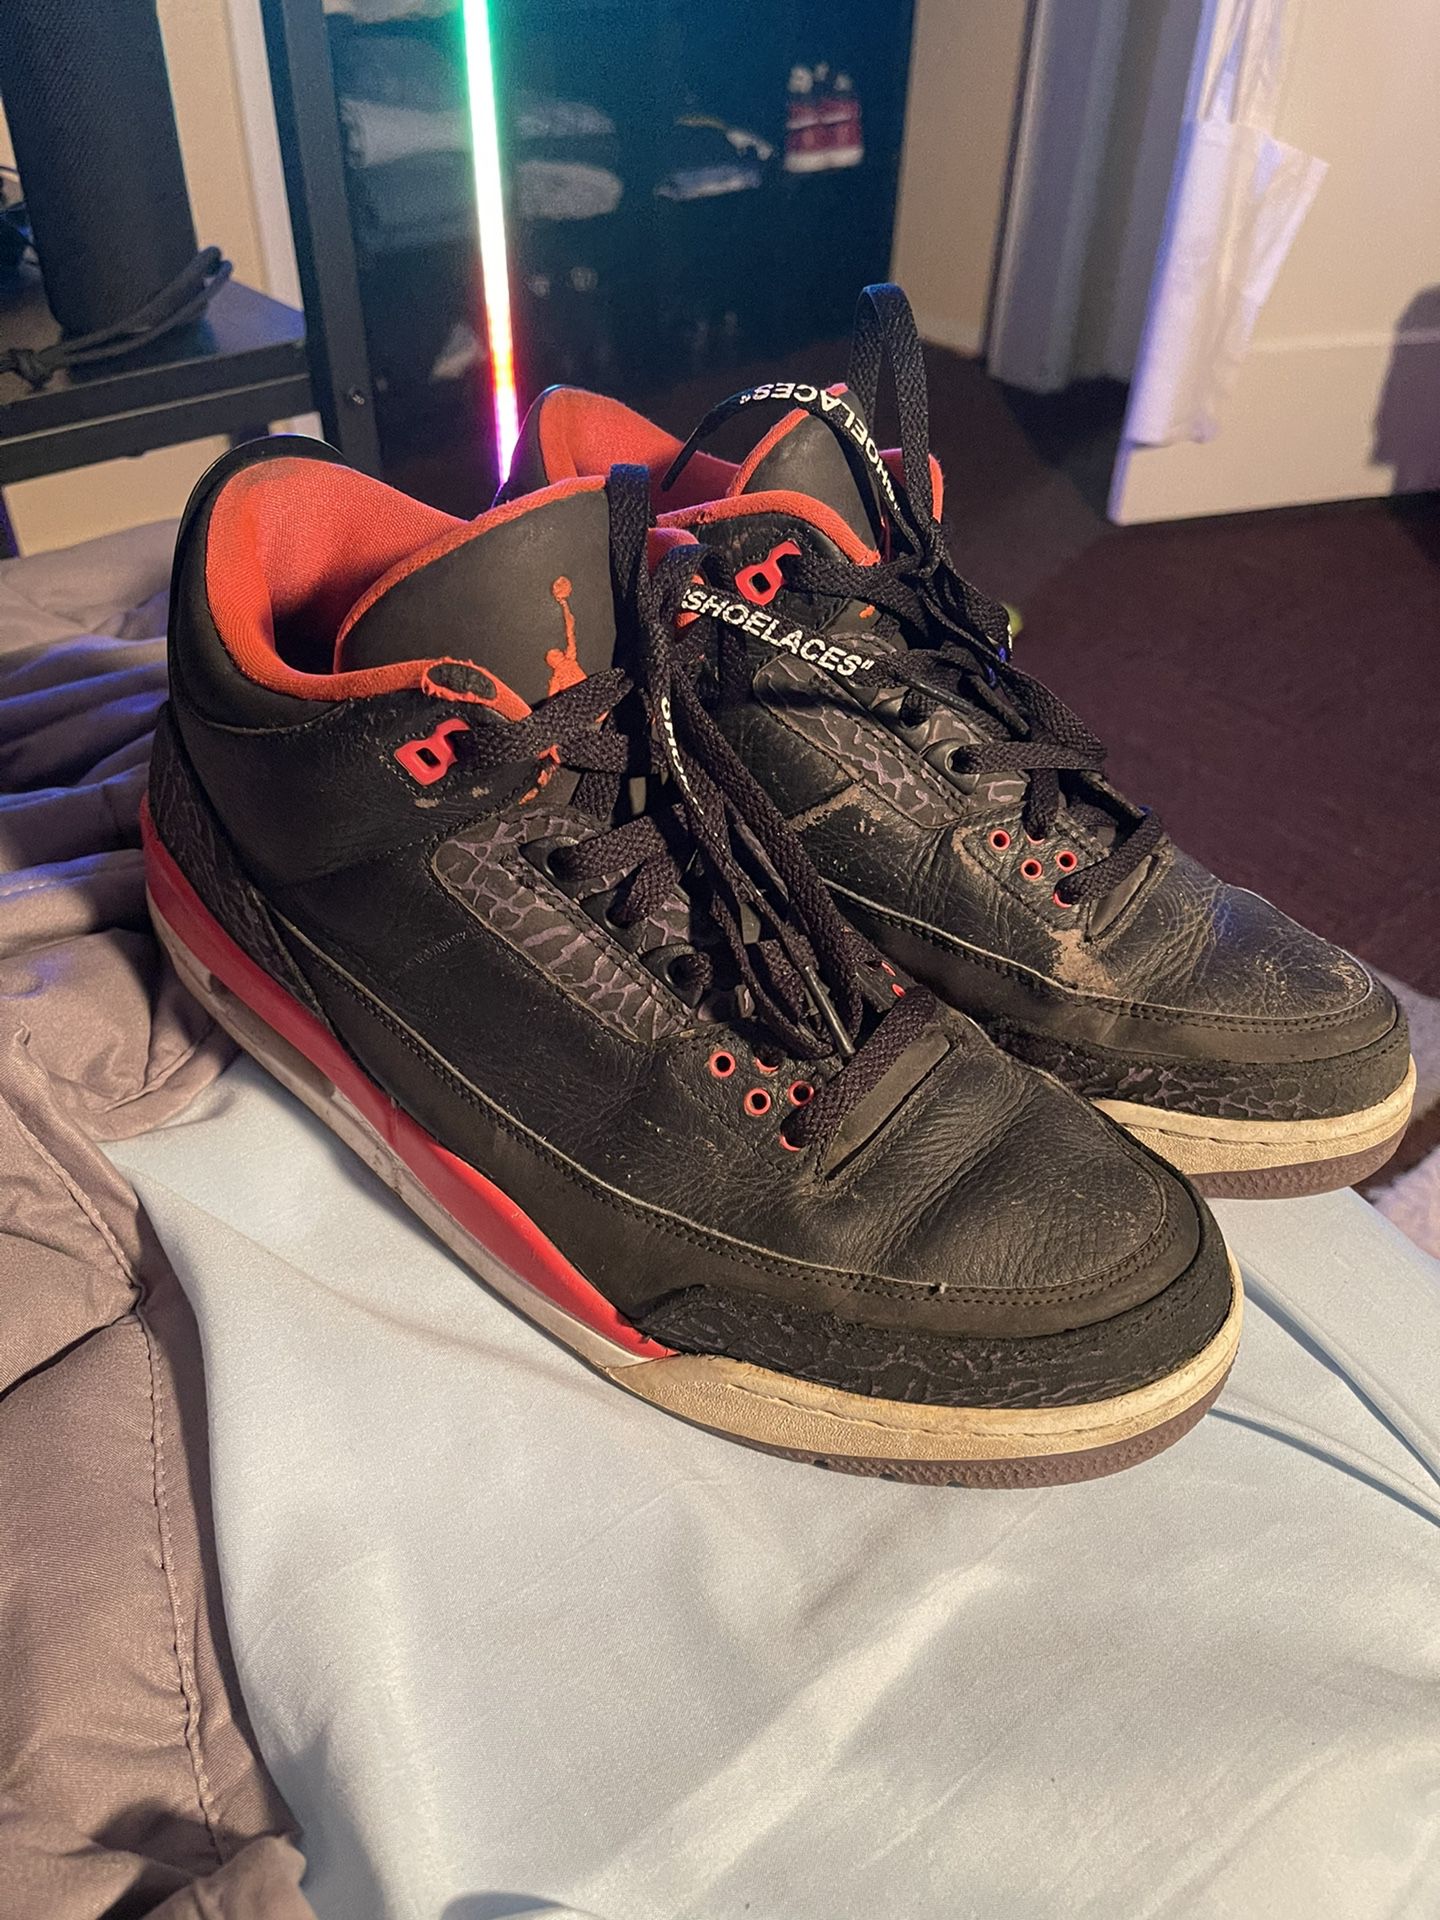 Jordan 3 Retro Crimson Size 12 